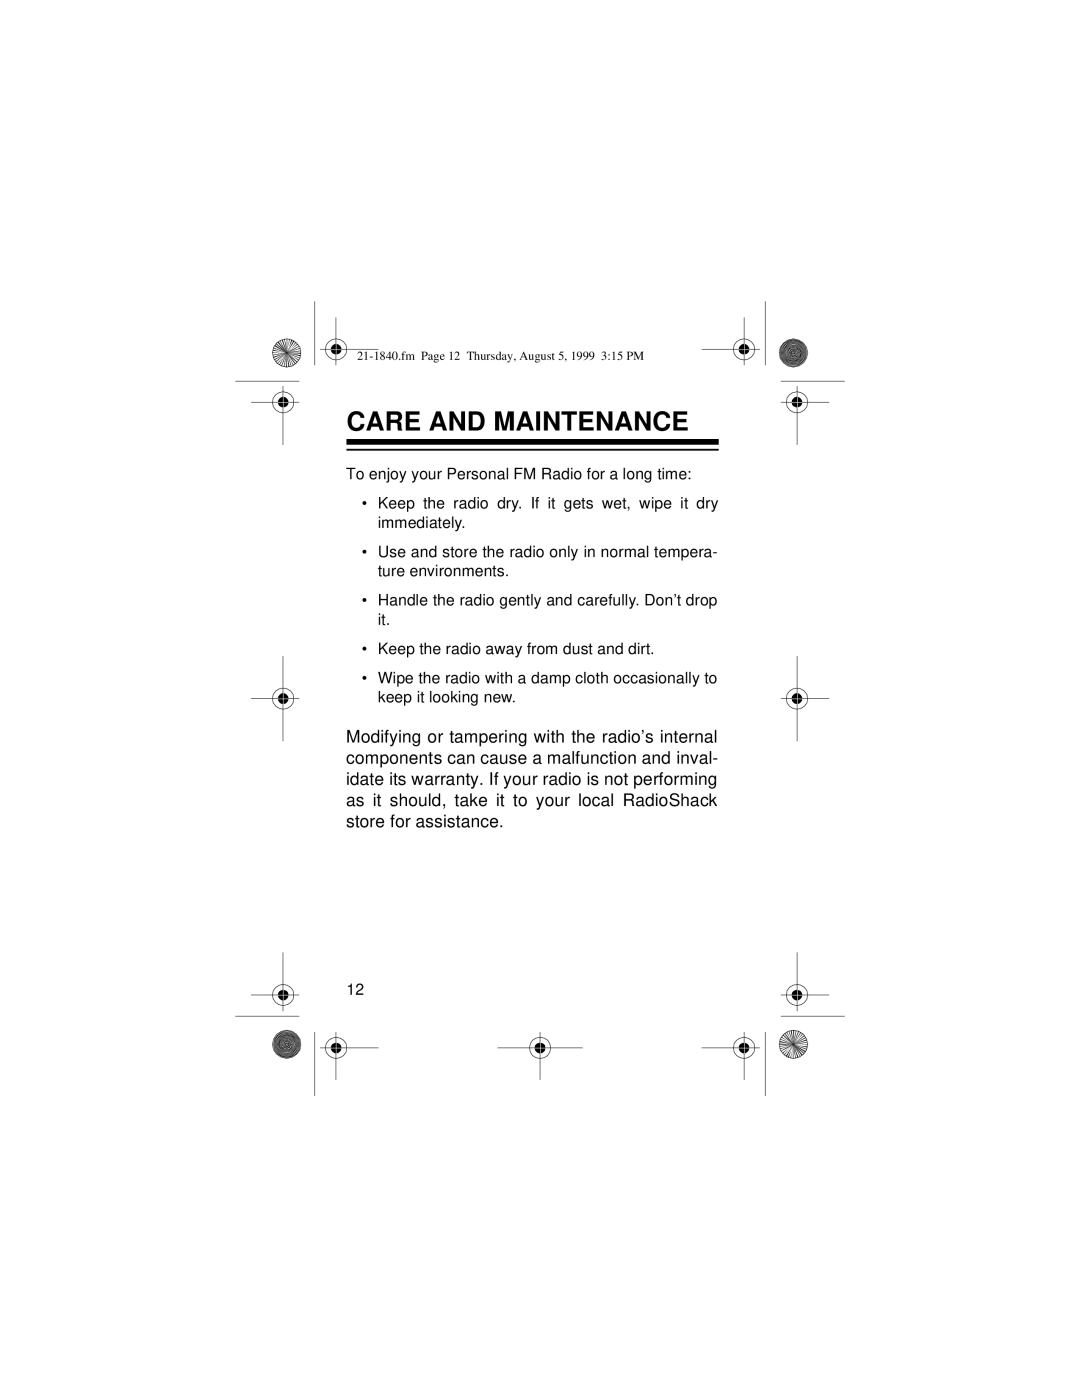 Radio Shack 21-1840 owner manual Care And Maintenance 